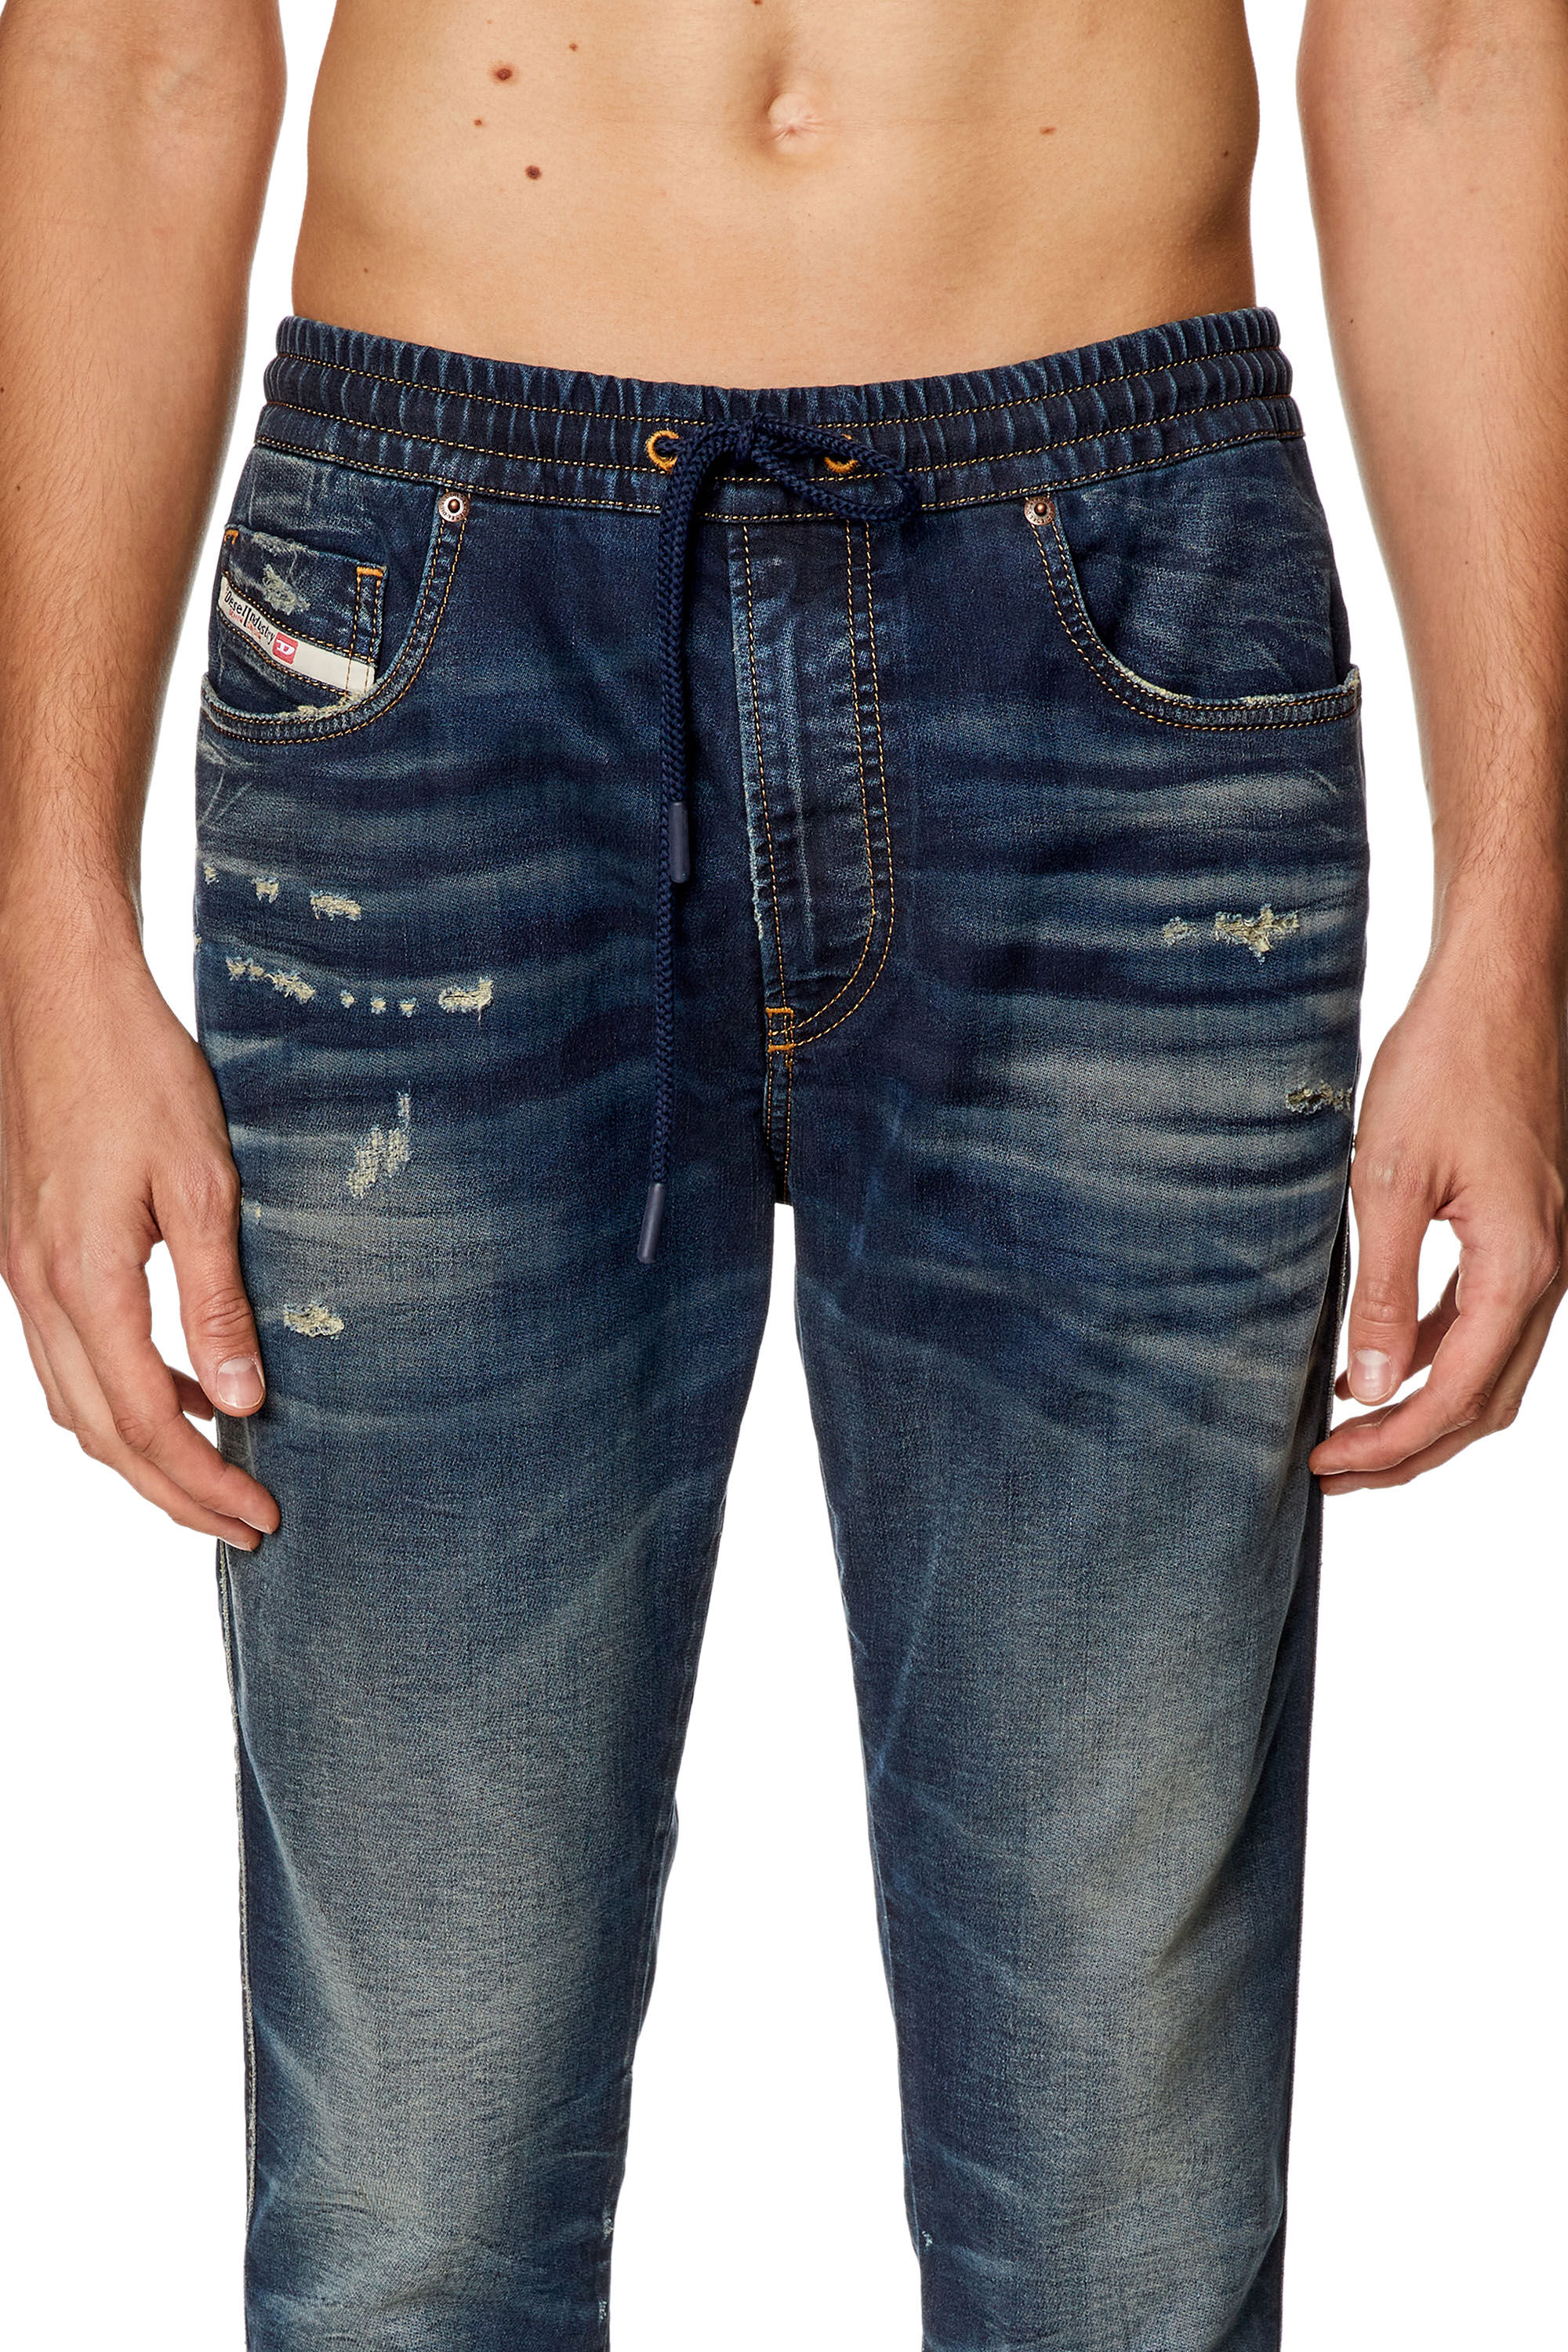 Men's Slim Jeans | Dark Blue | Diesel 2060 D-Strukt Joggjeans®